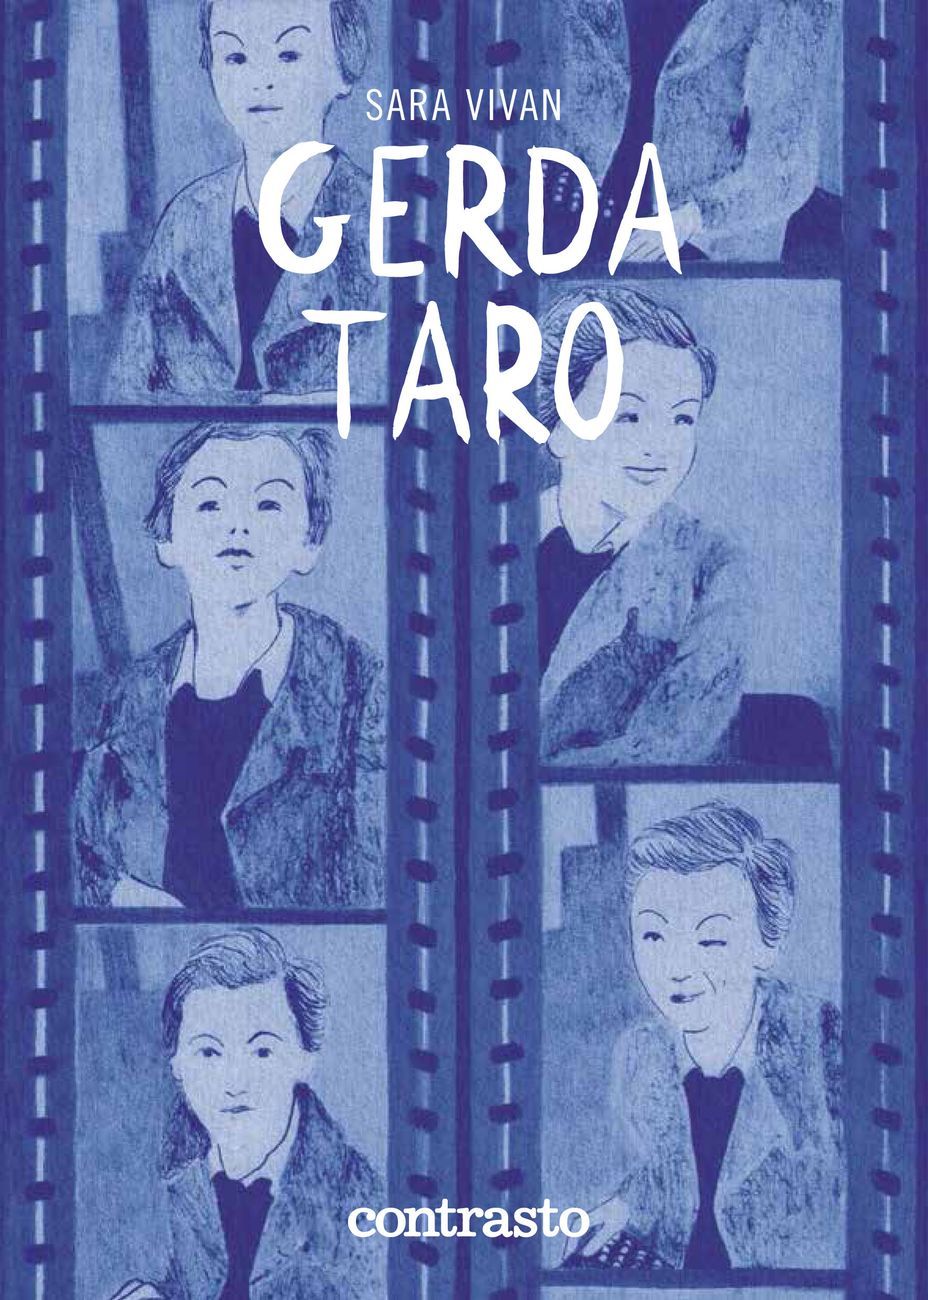 Sara Vivan – Gerda Taro (Contrasto, 2019)